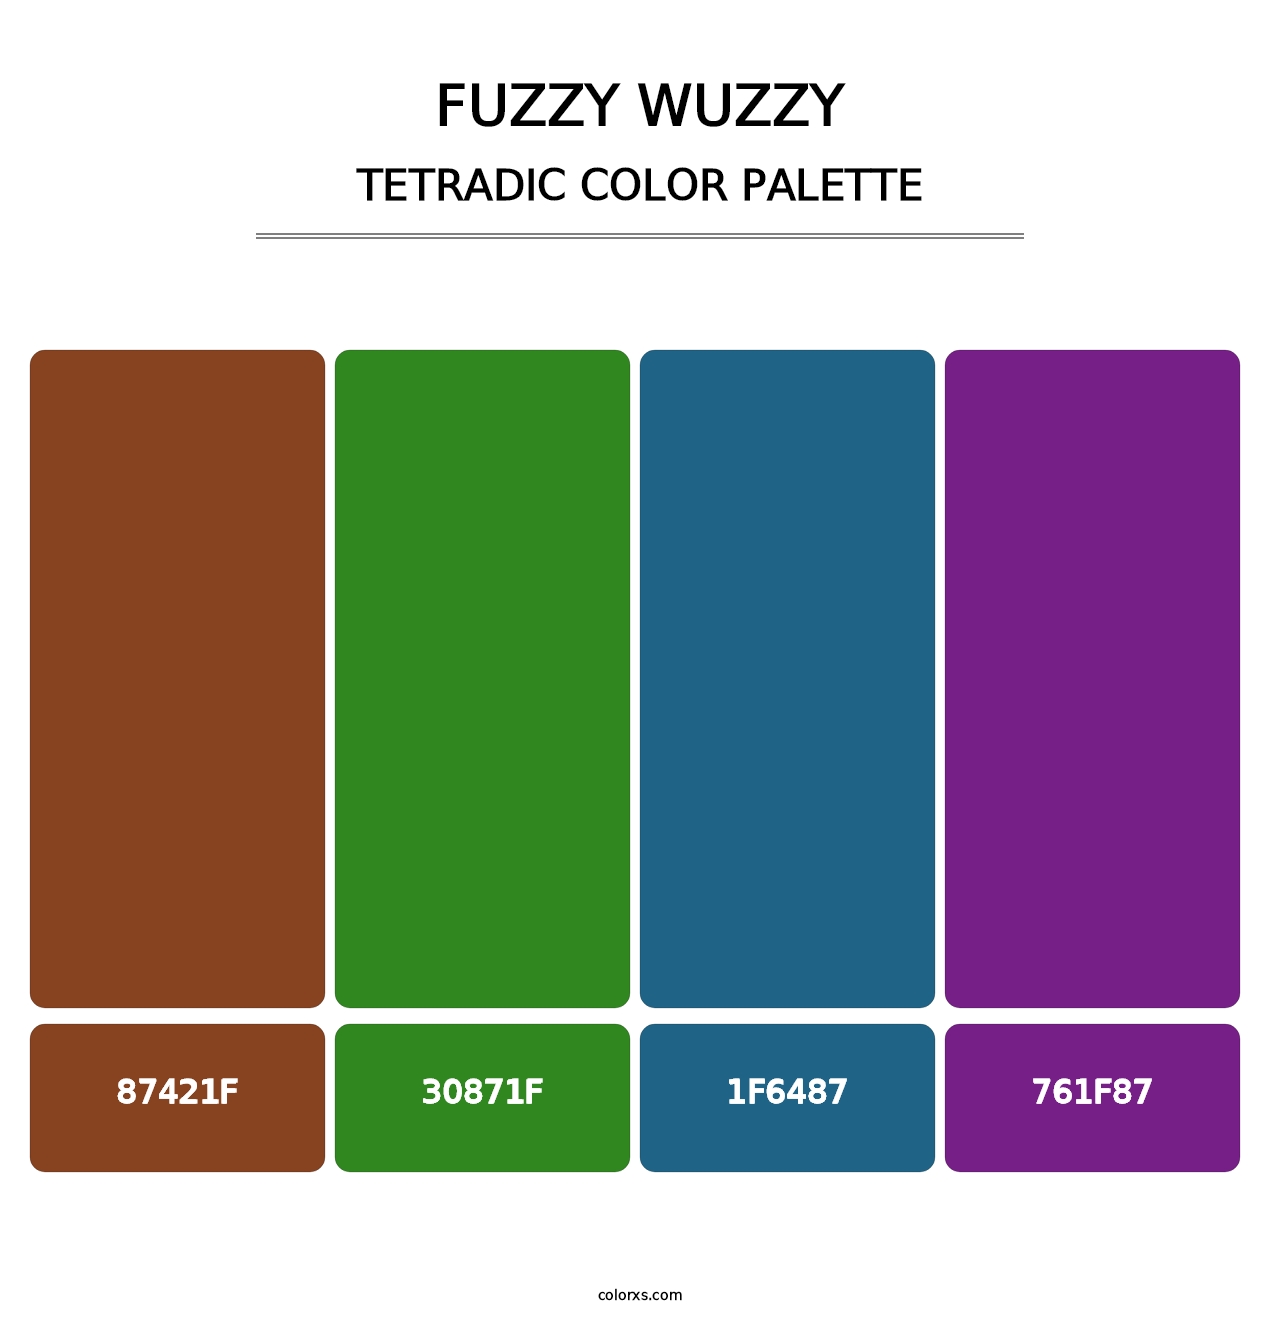 Fuzzy Wuzzy - Tetradic Color Palette